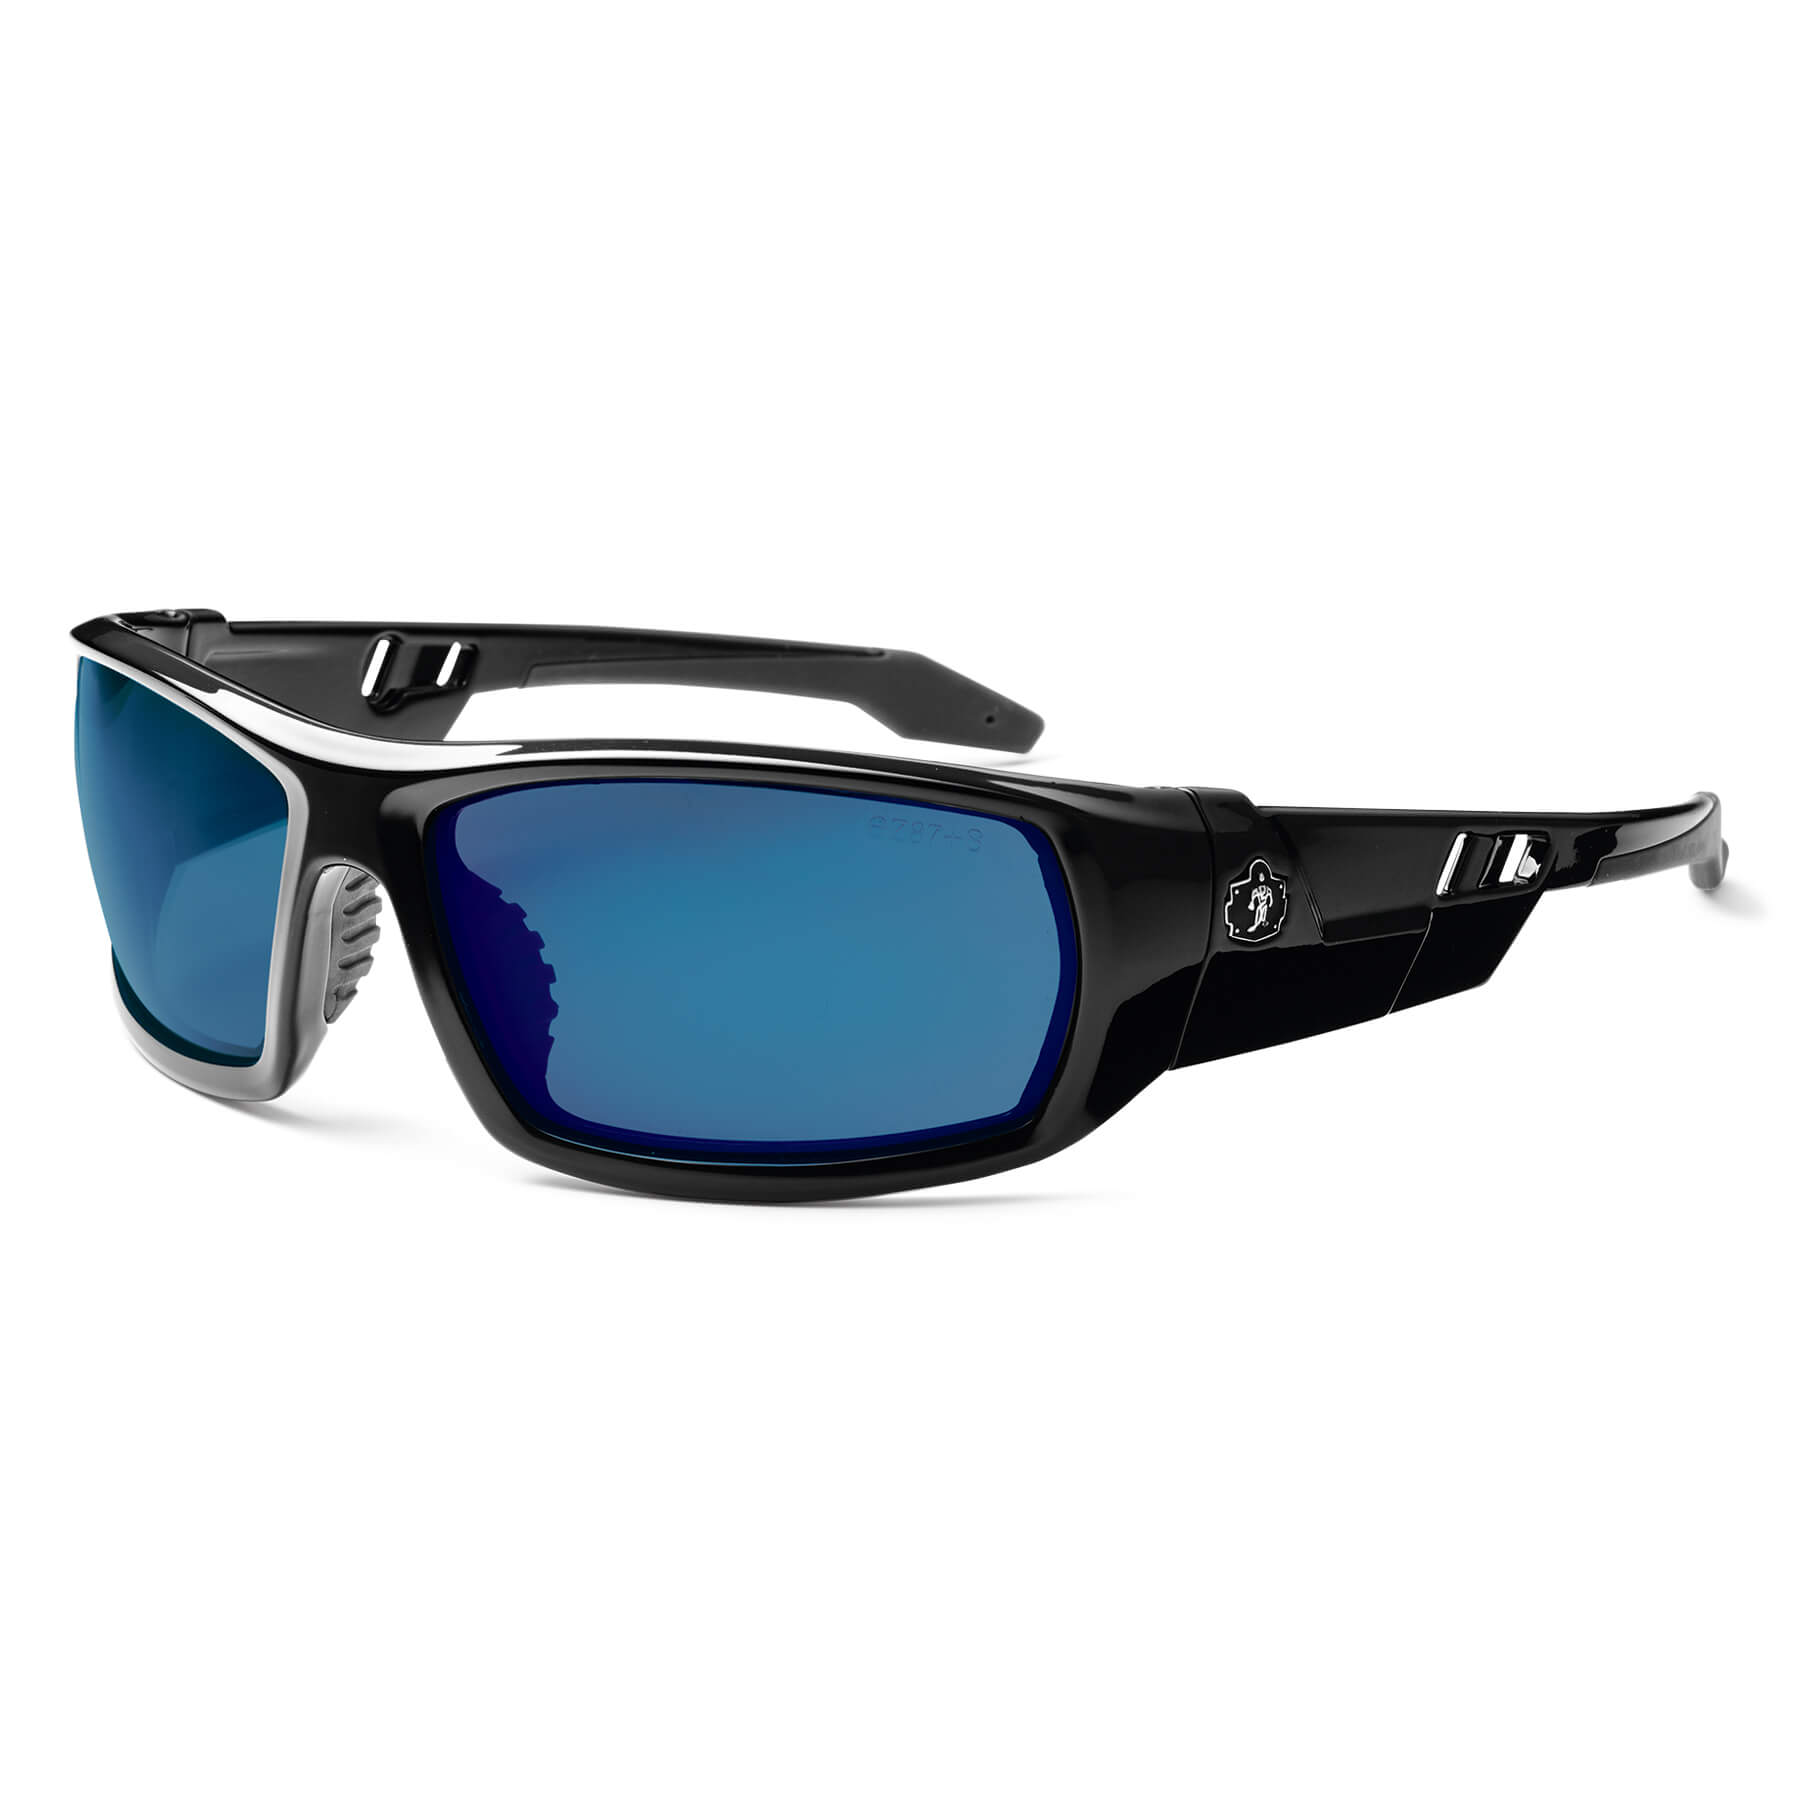 Ergodyne Skullerz Odin Safety Sunglasses- Black Frame, Blue Mirror Lens - image 1 of 2